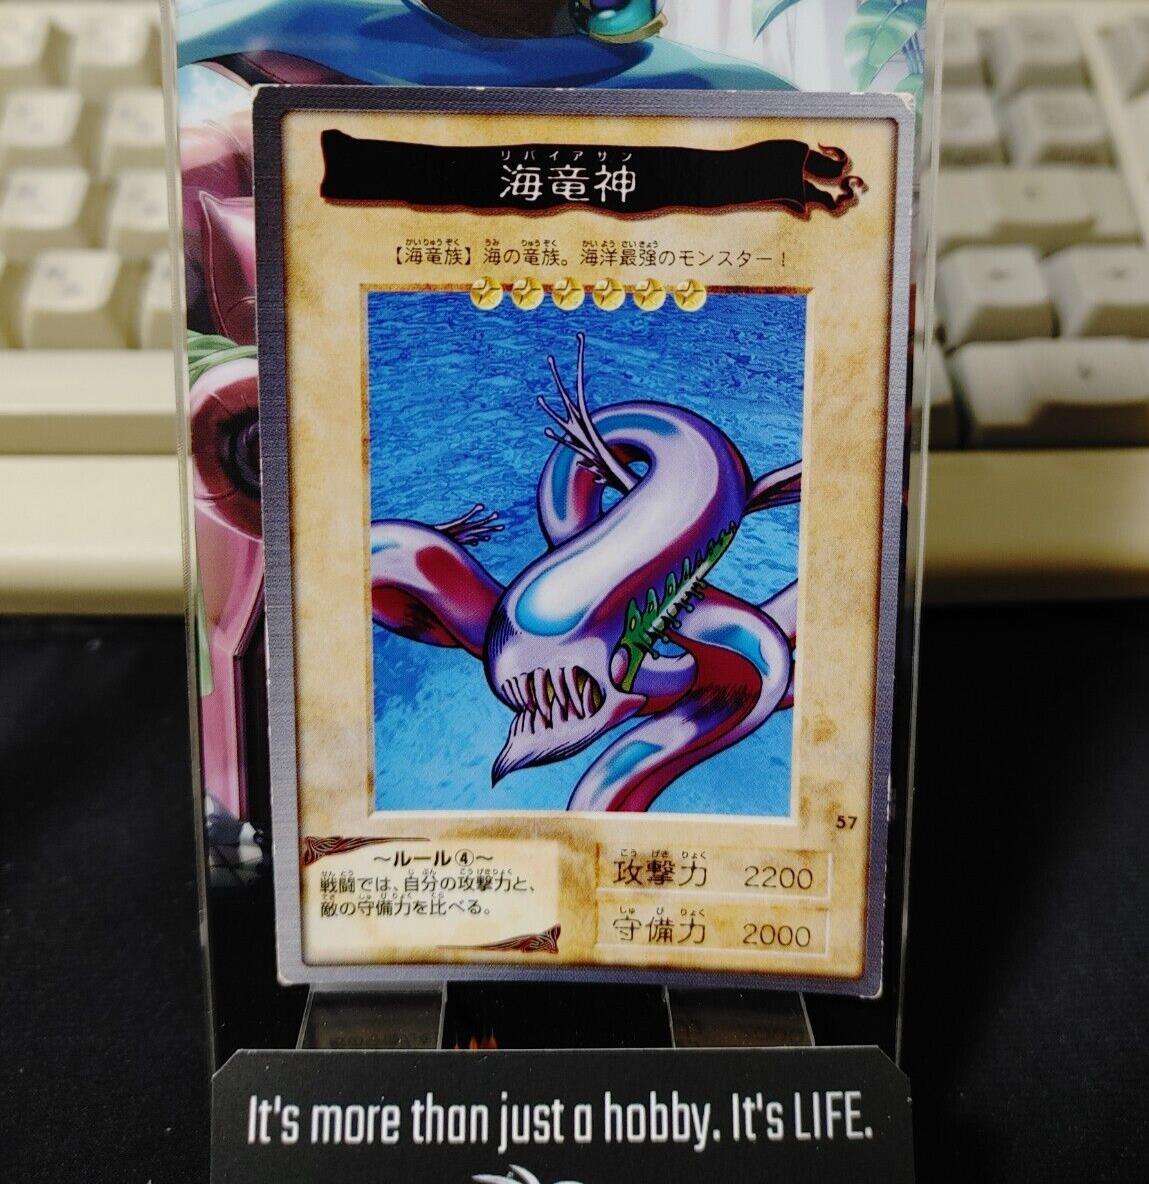 Yu-Gi-Oh Bandai Kairyu-Shin Carddass Card #57 Japanese Retro Japan